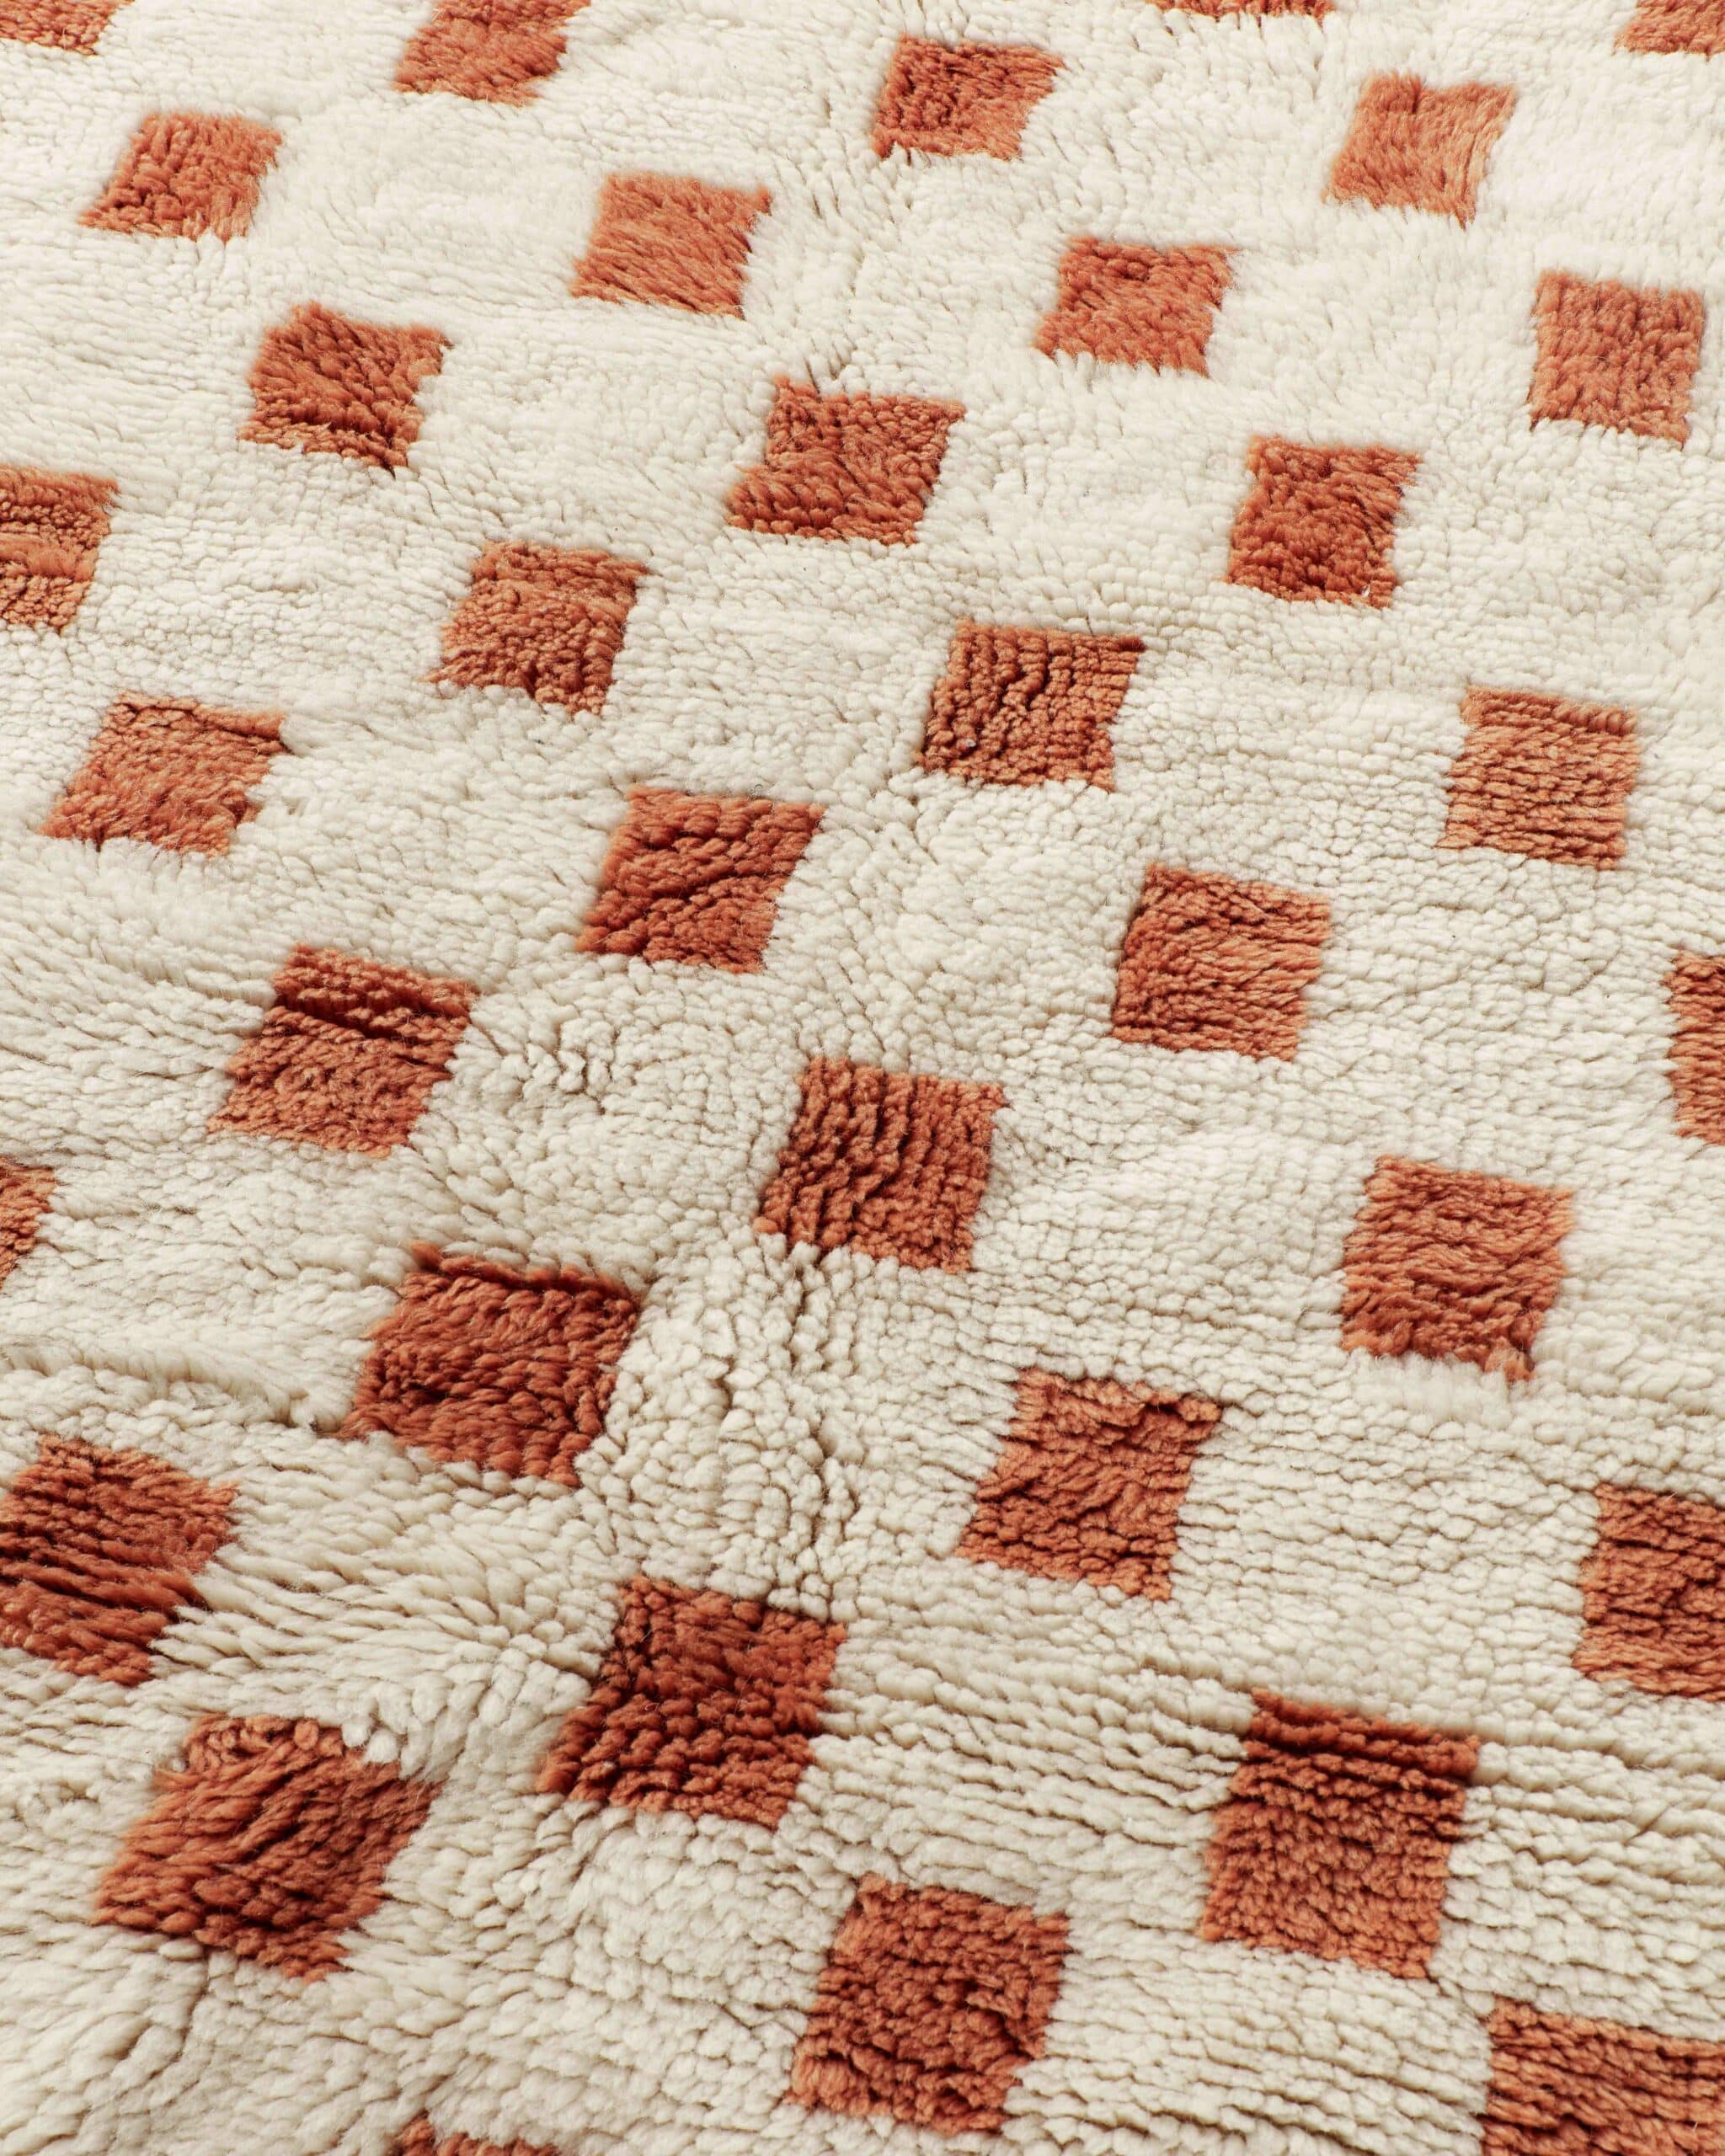 Burnt orange Mrirt rug, detail